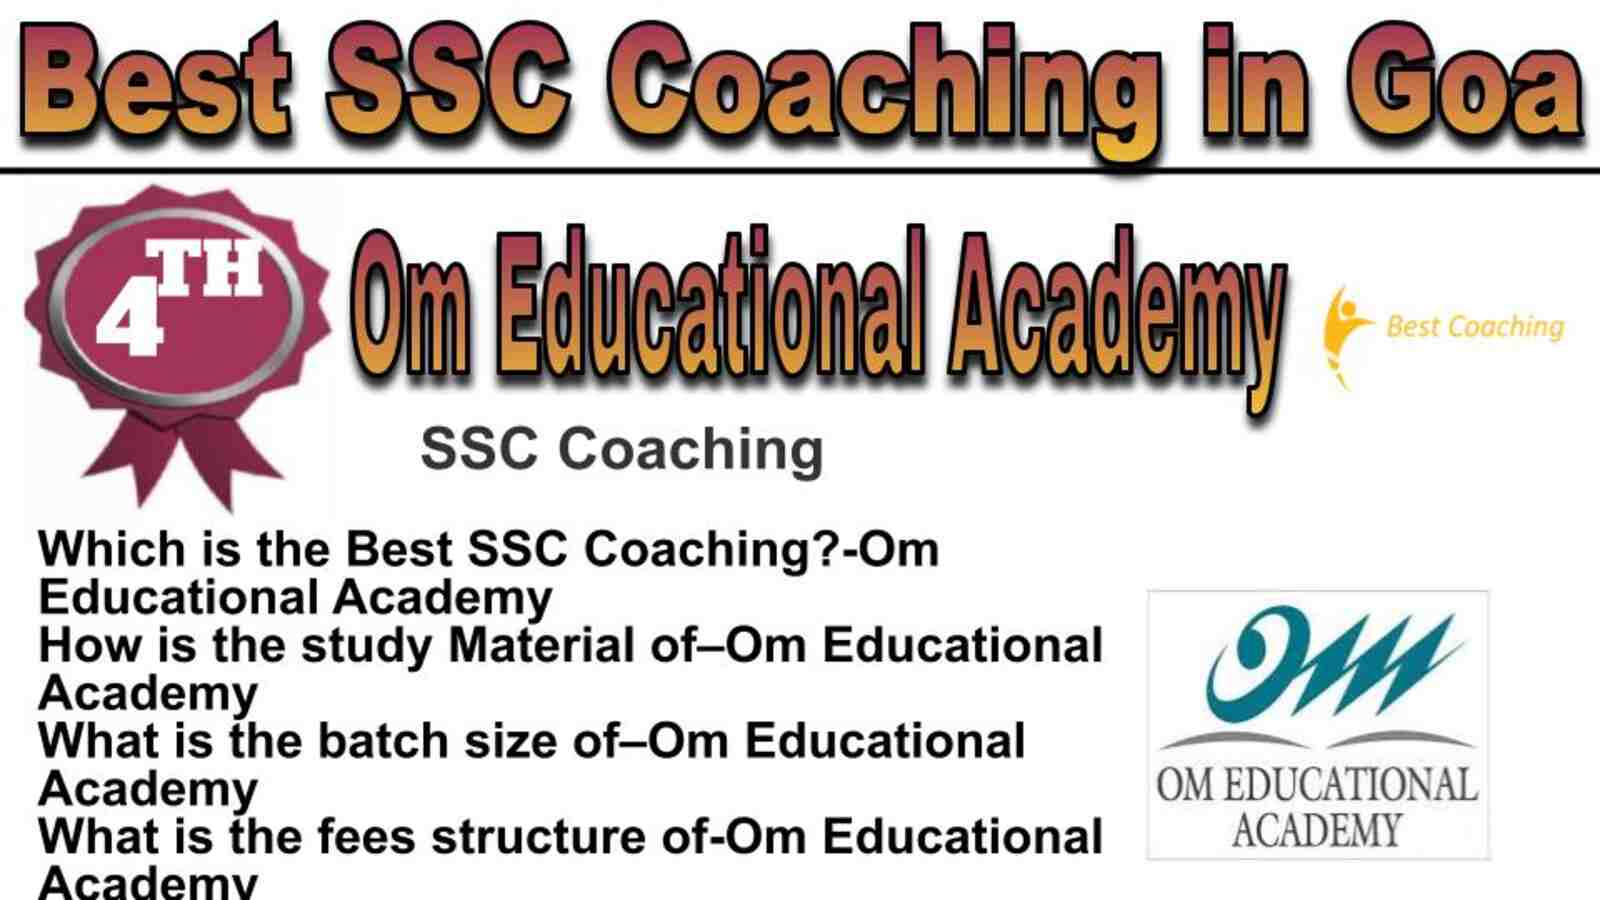 Rank 4 best SSC coaching in Goa